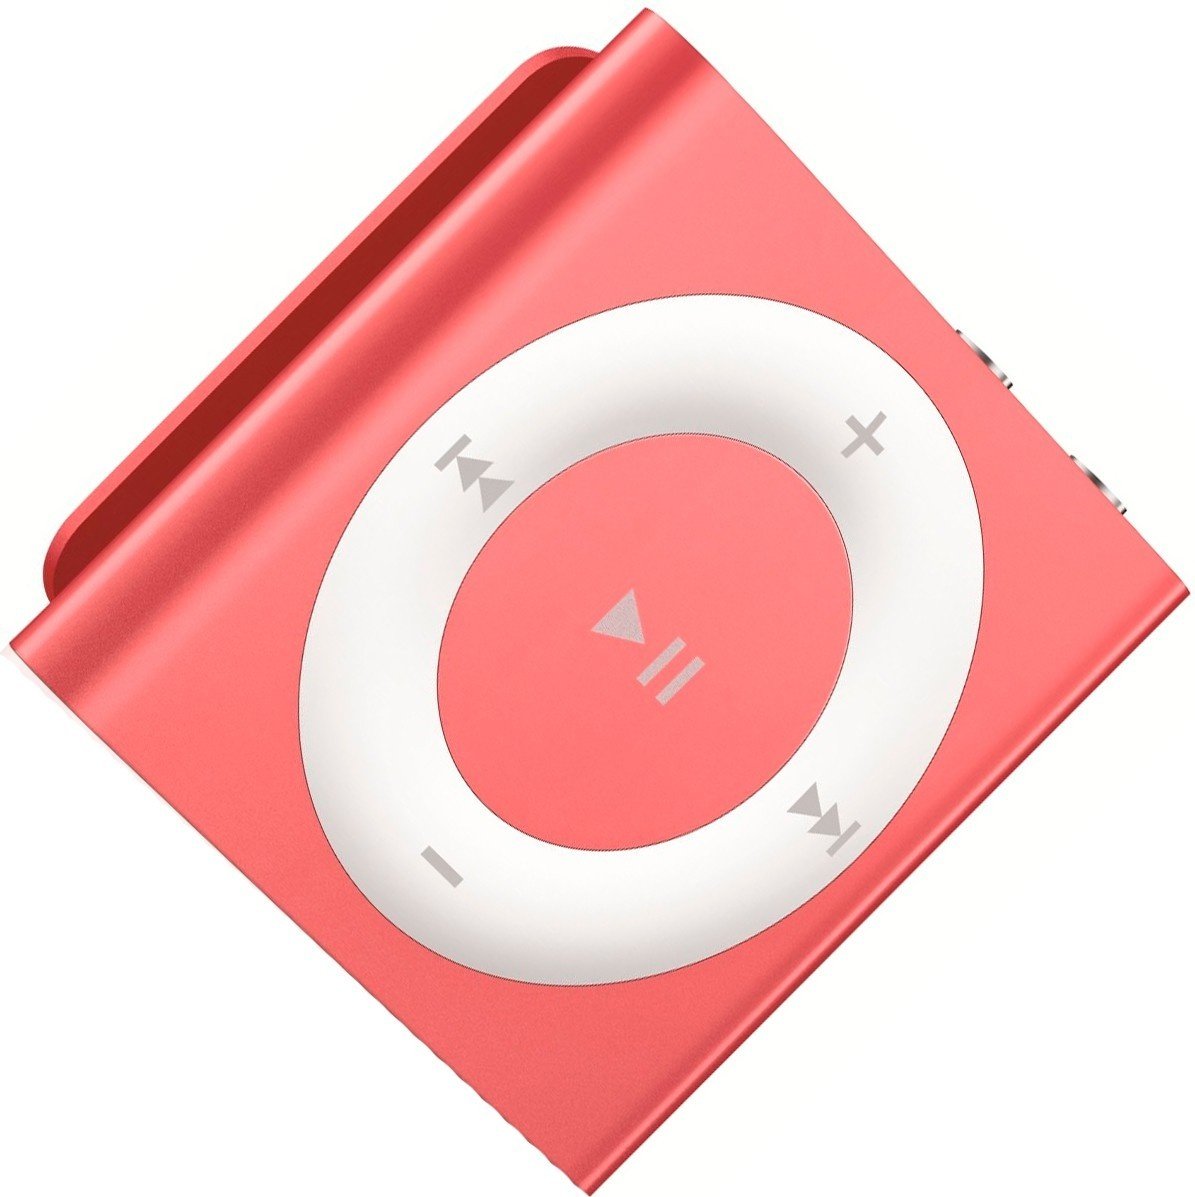 MP3 плеер APPLE iPod shuffle 2GB Pink (new color) – купить в Киеве